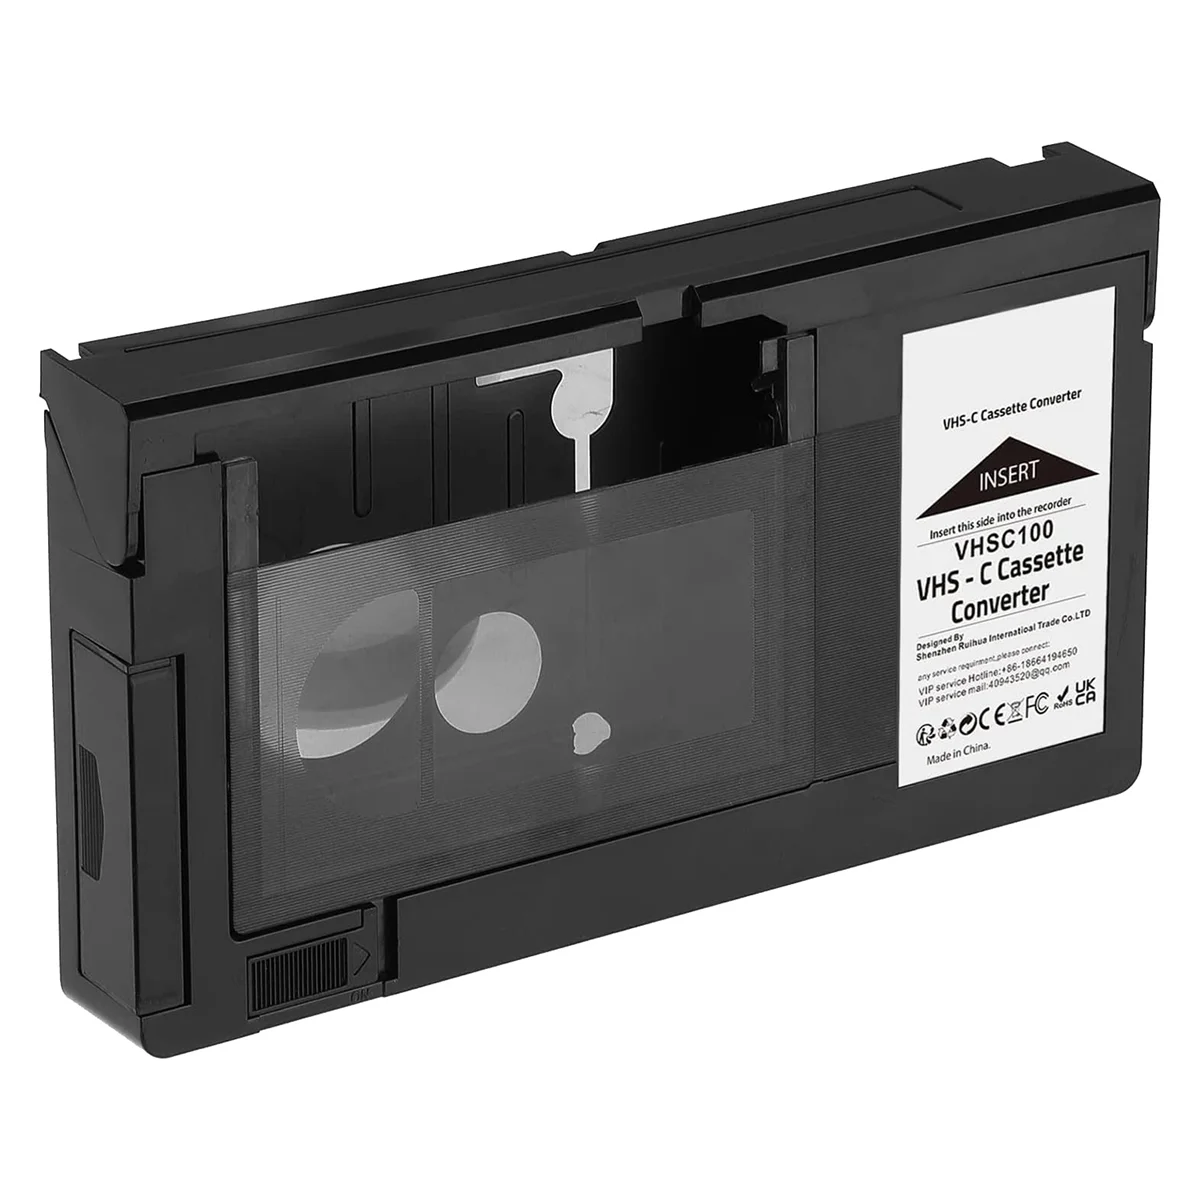 VHS-C kassetten adapter für VHS-C svhs camcorder jvc rca panasonic motorisierte vhs kassetten adapter nicht für 8mm/minidv/hi8